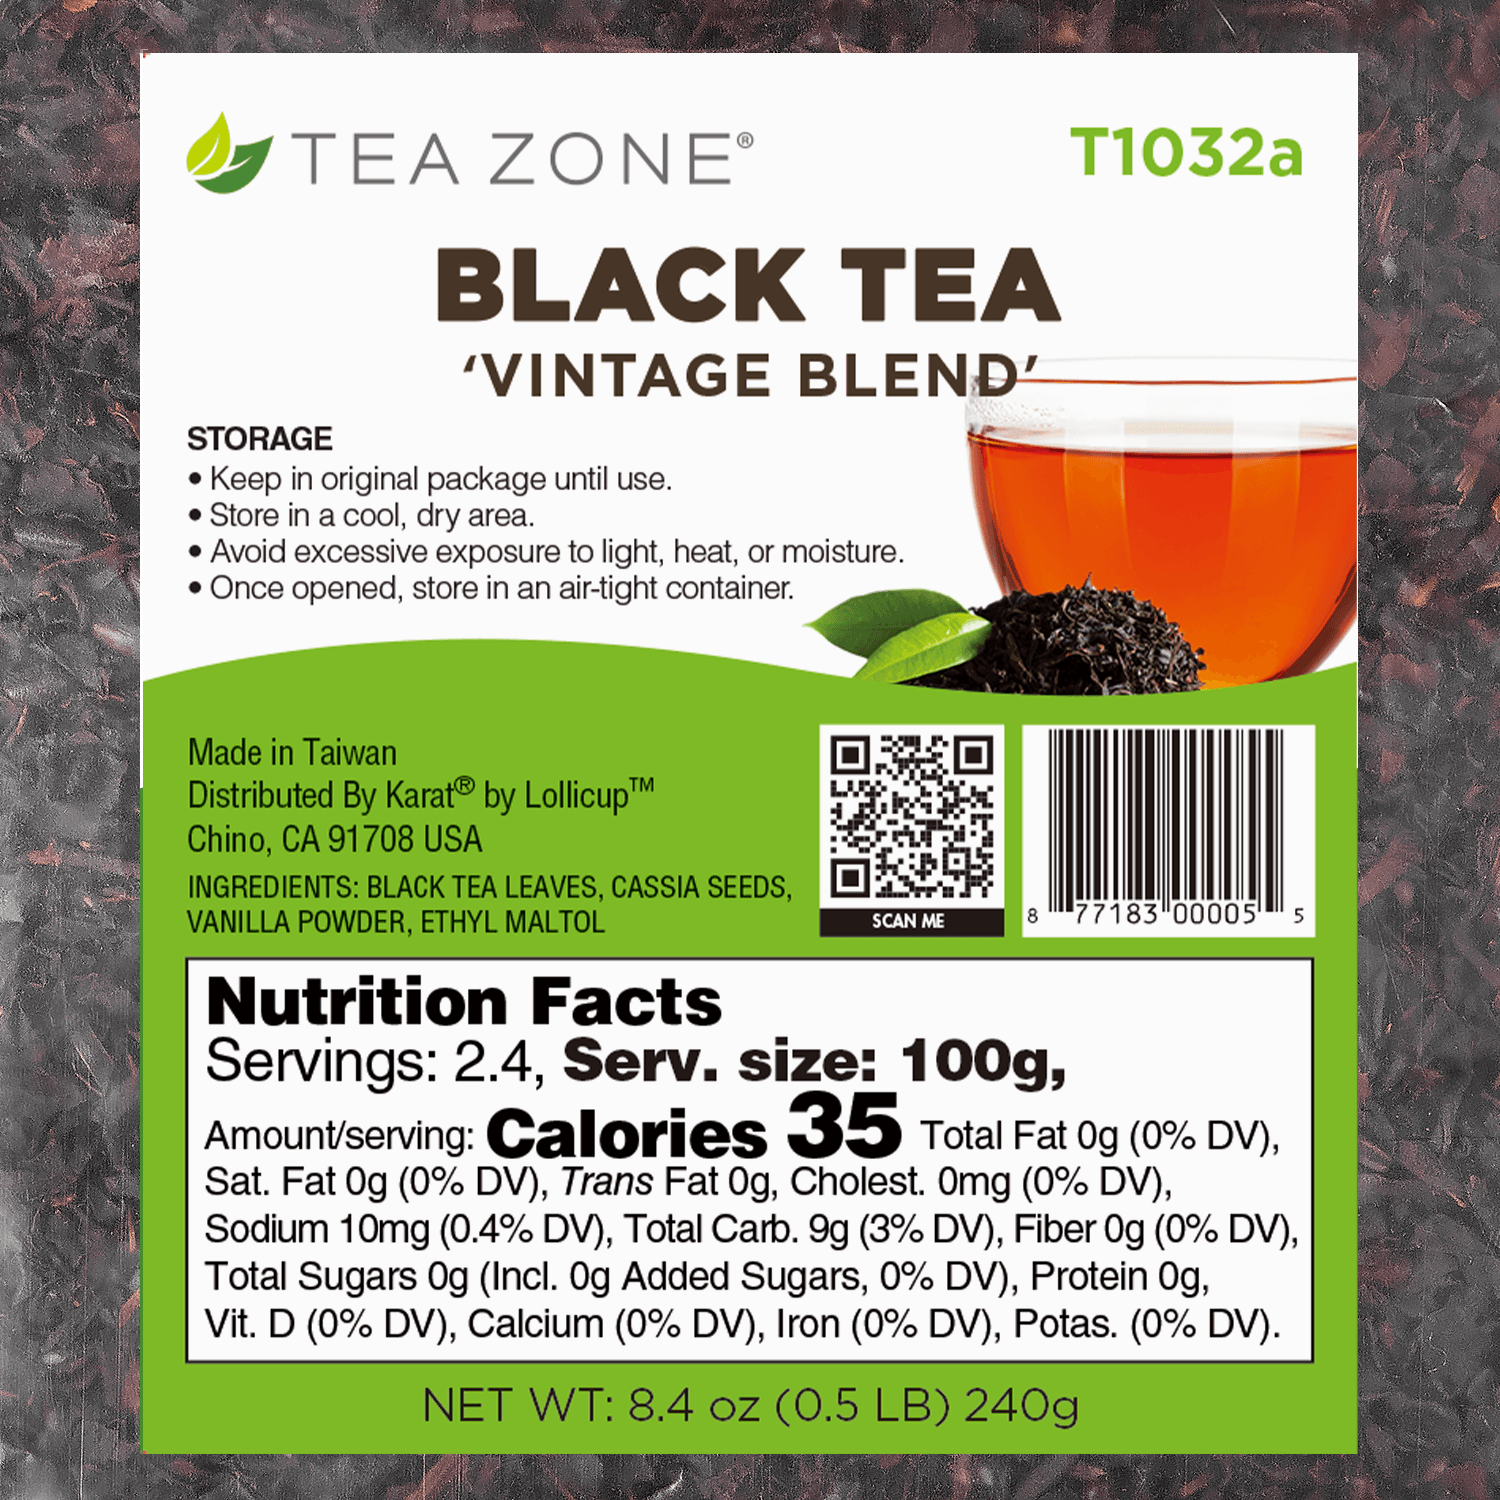 Tea Zone Vintage Blend Black Tea Leaves - Case of 25 bags